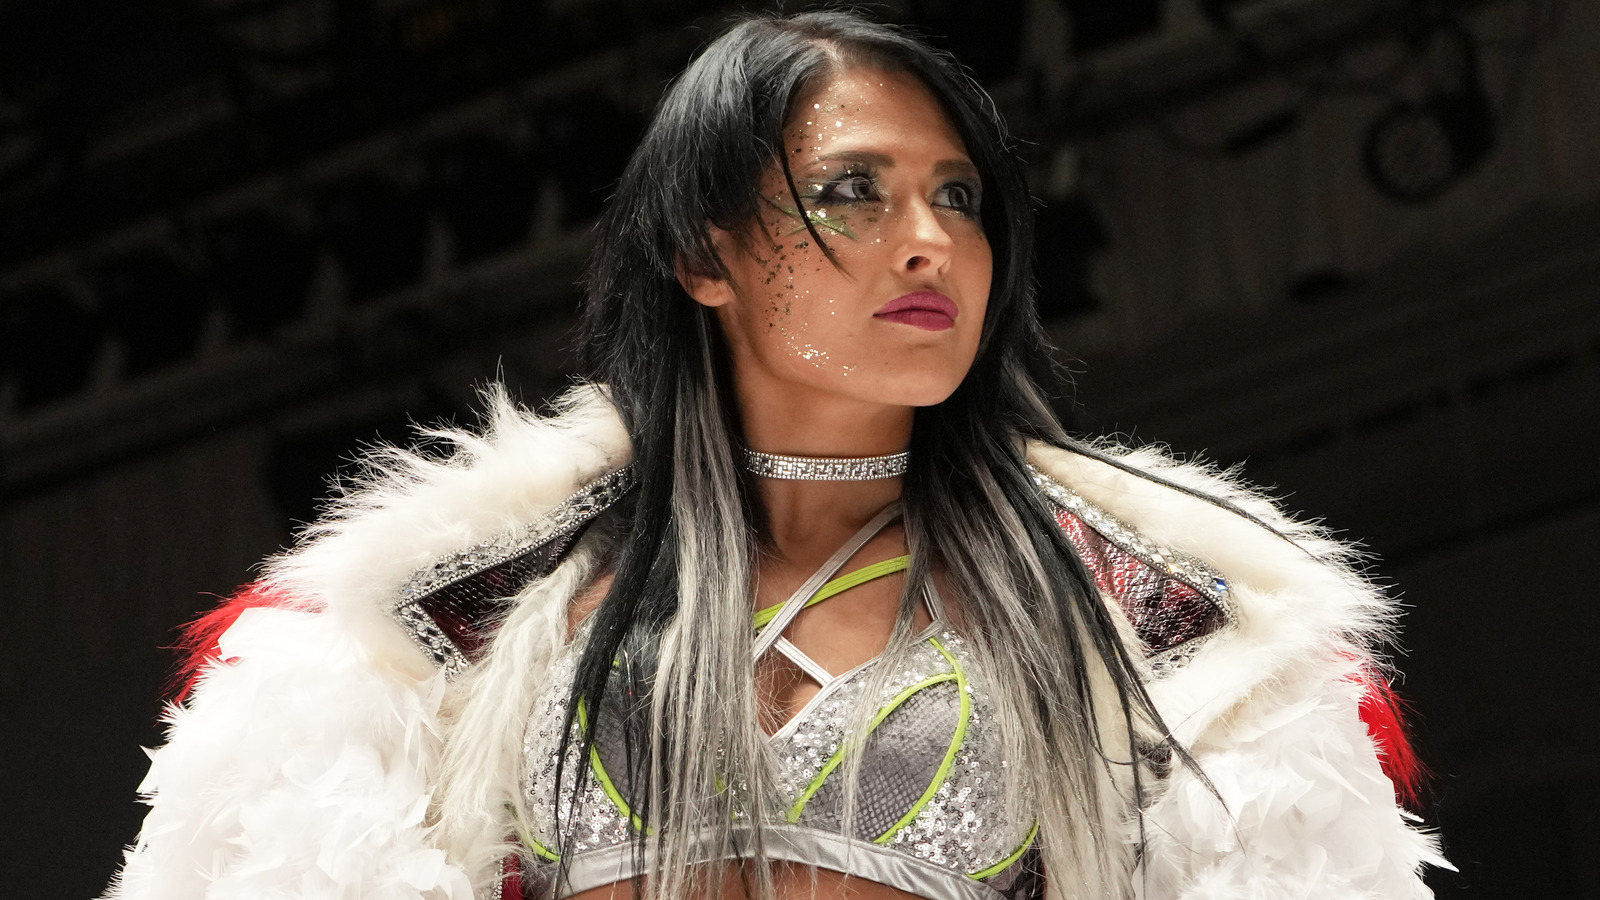 Backstage Update On Giulia's WWE Status Following Injury